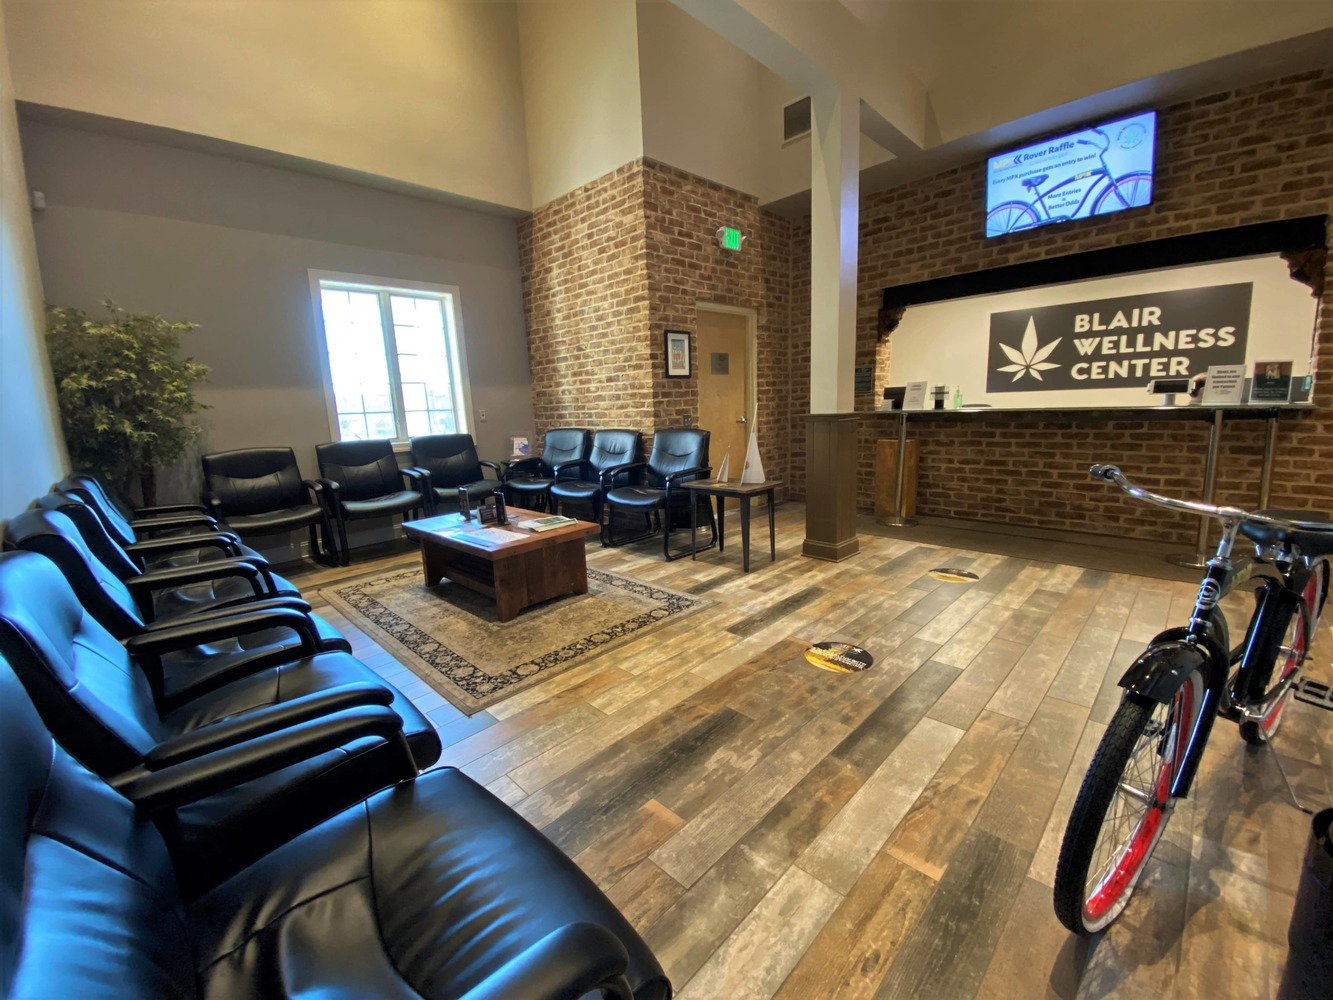 Our spacious lobby creates a comfortable, relaxed environment.